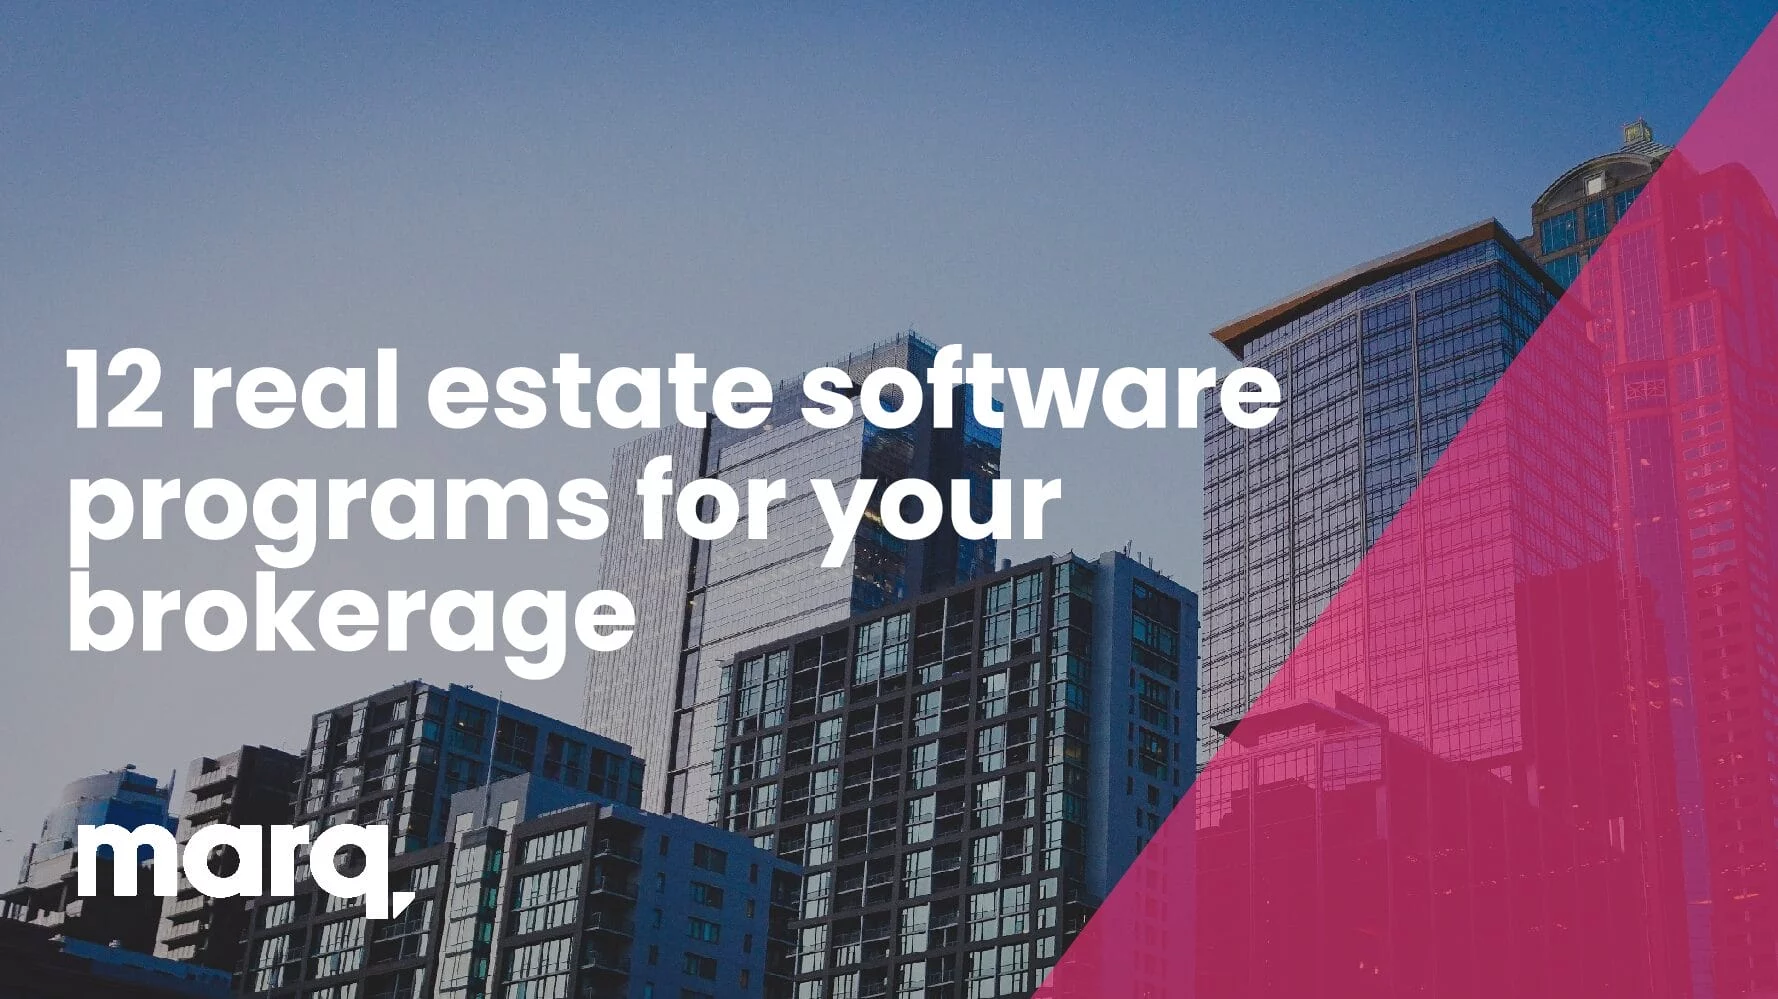 12 real estate softwares for your brokerage